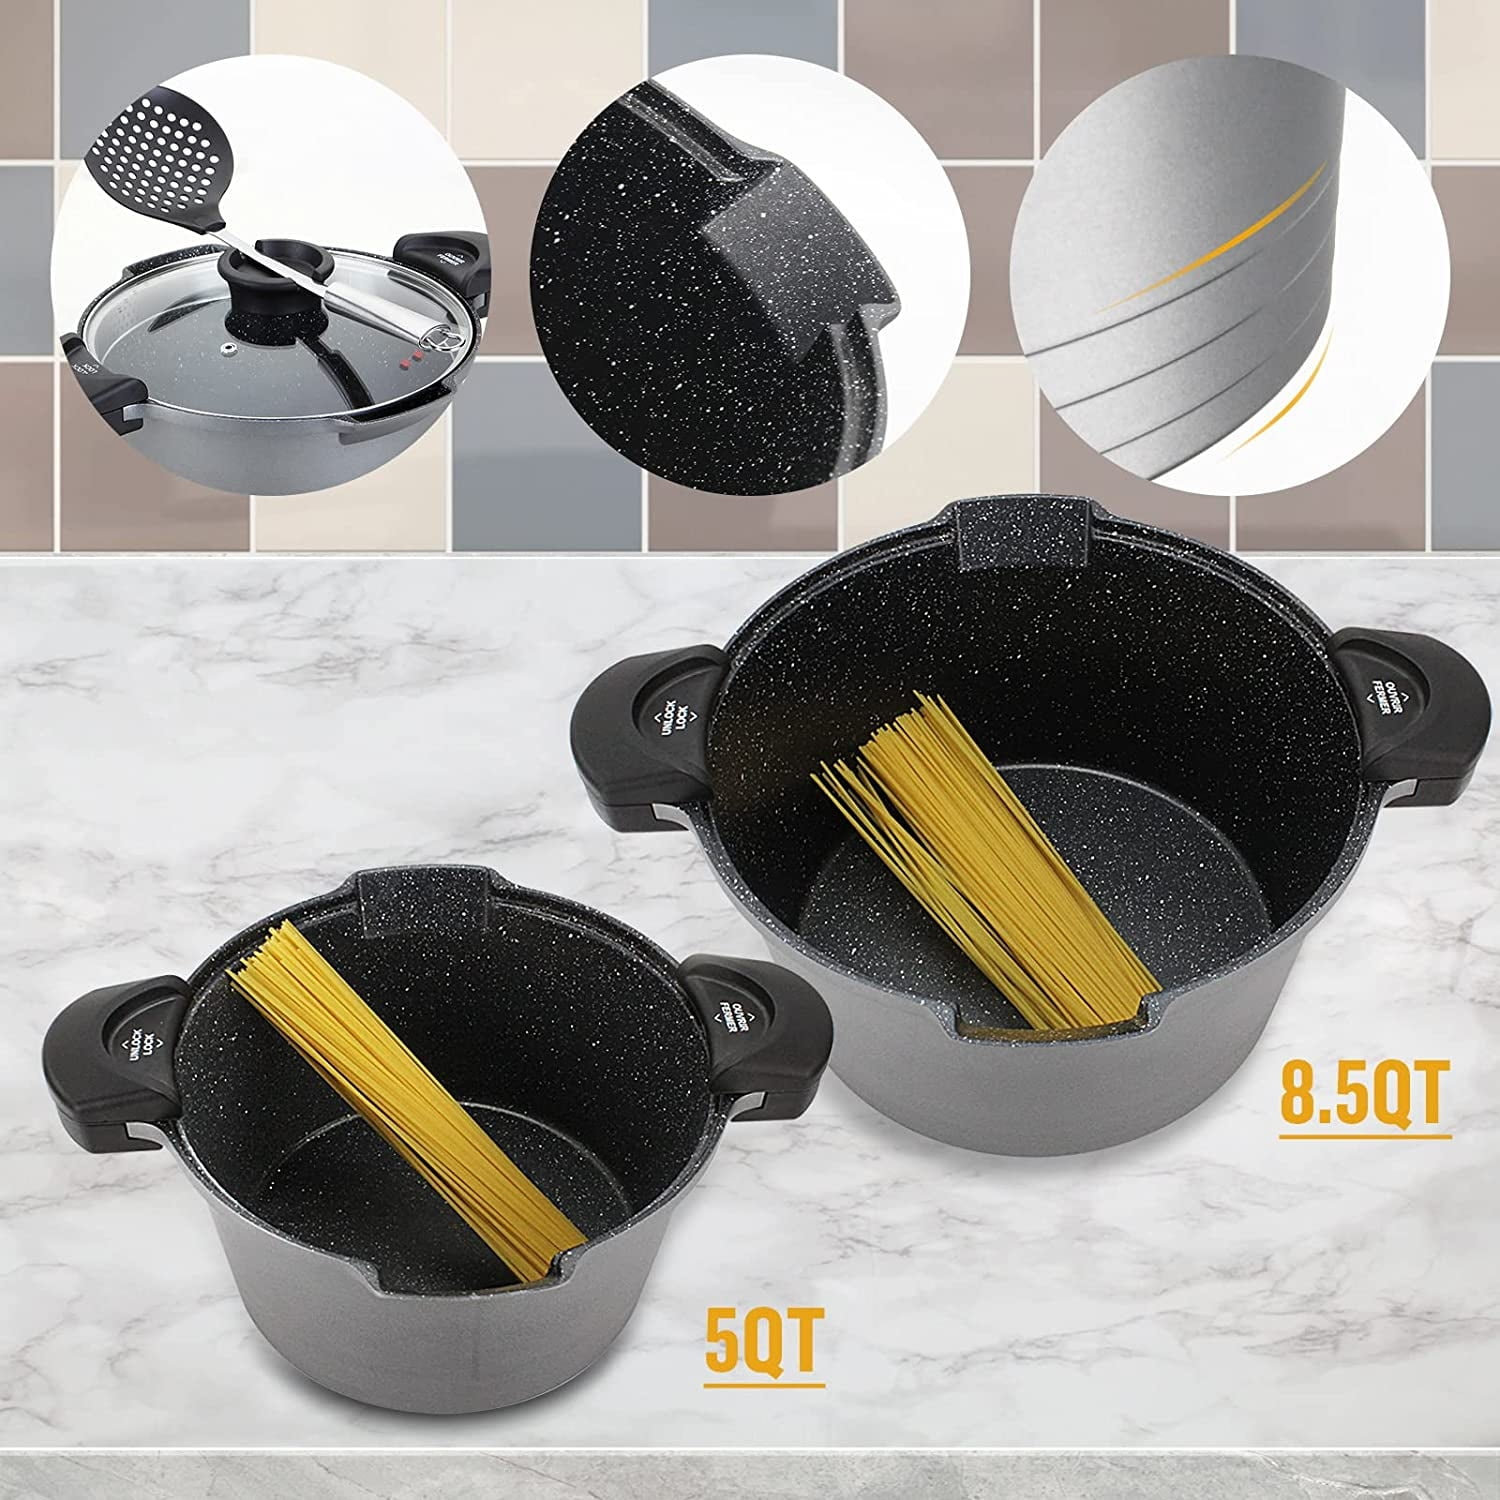 5 Qt. Non-stick Ti-ceramic Pasta Pot With Built-in Strainer And